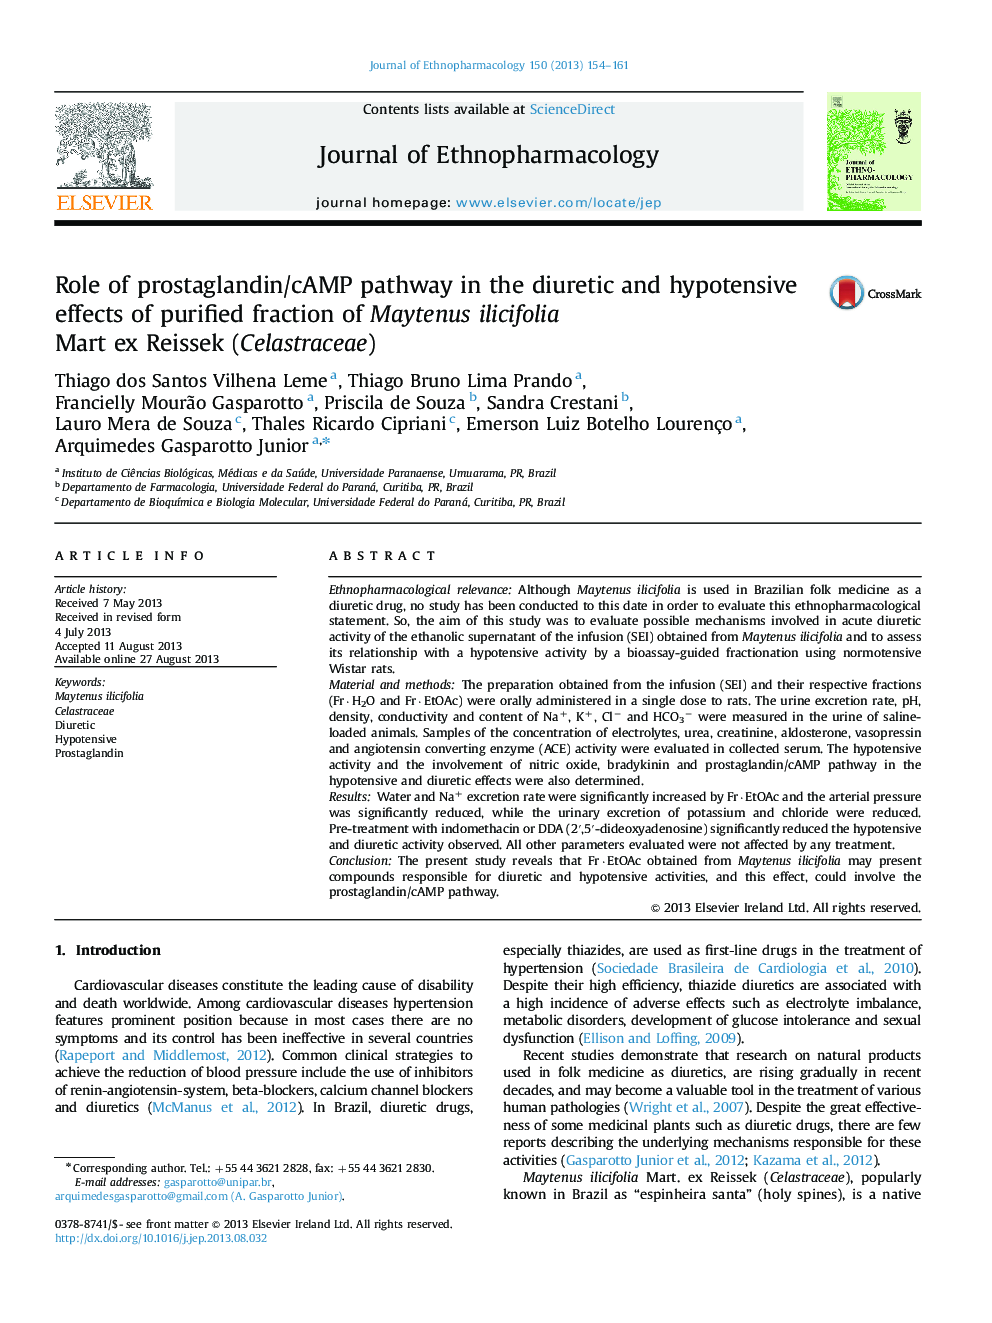 Role of prostaglandin/cAMP pathway in the diuretic and hypotensive effects of purified fraction of Maytenus ilicifolia Mart ex Reissek (Celastraceae)